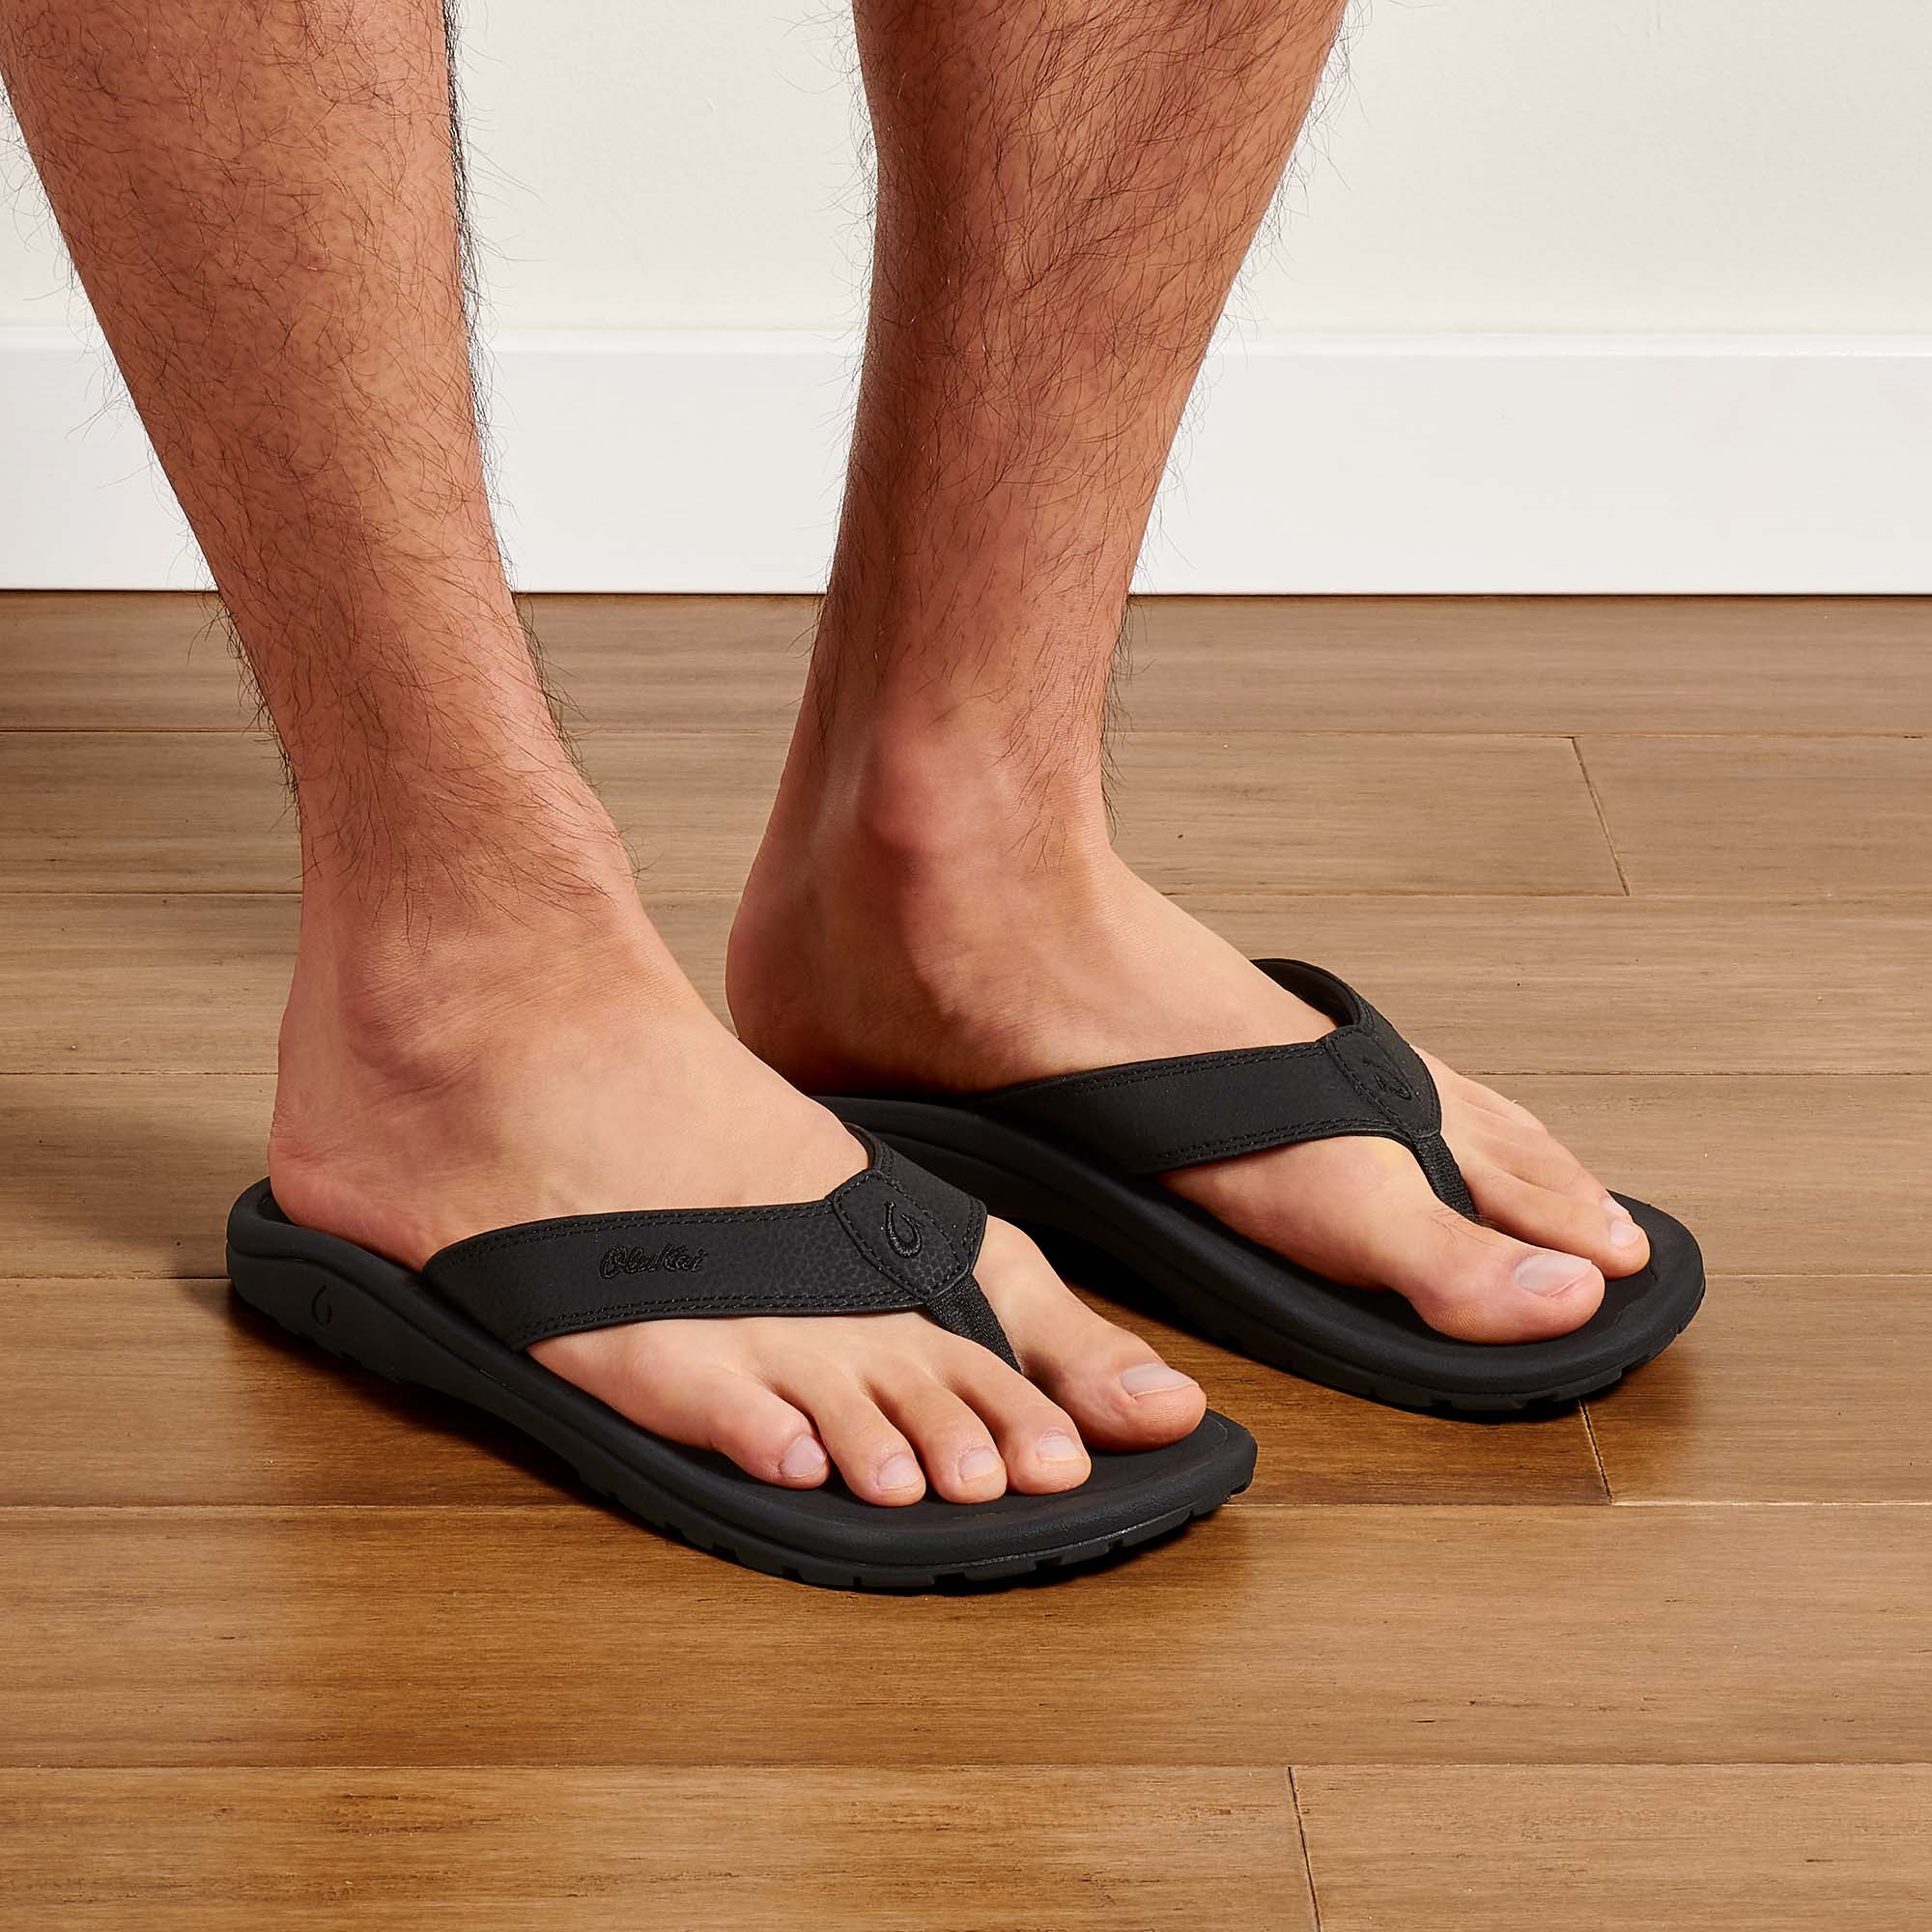 OluKai 'Ohana Stone Men's Sandals